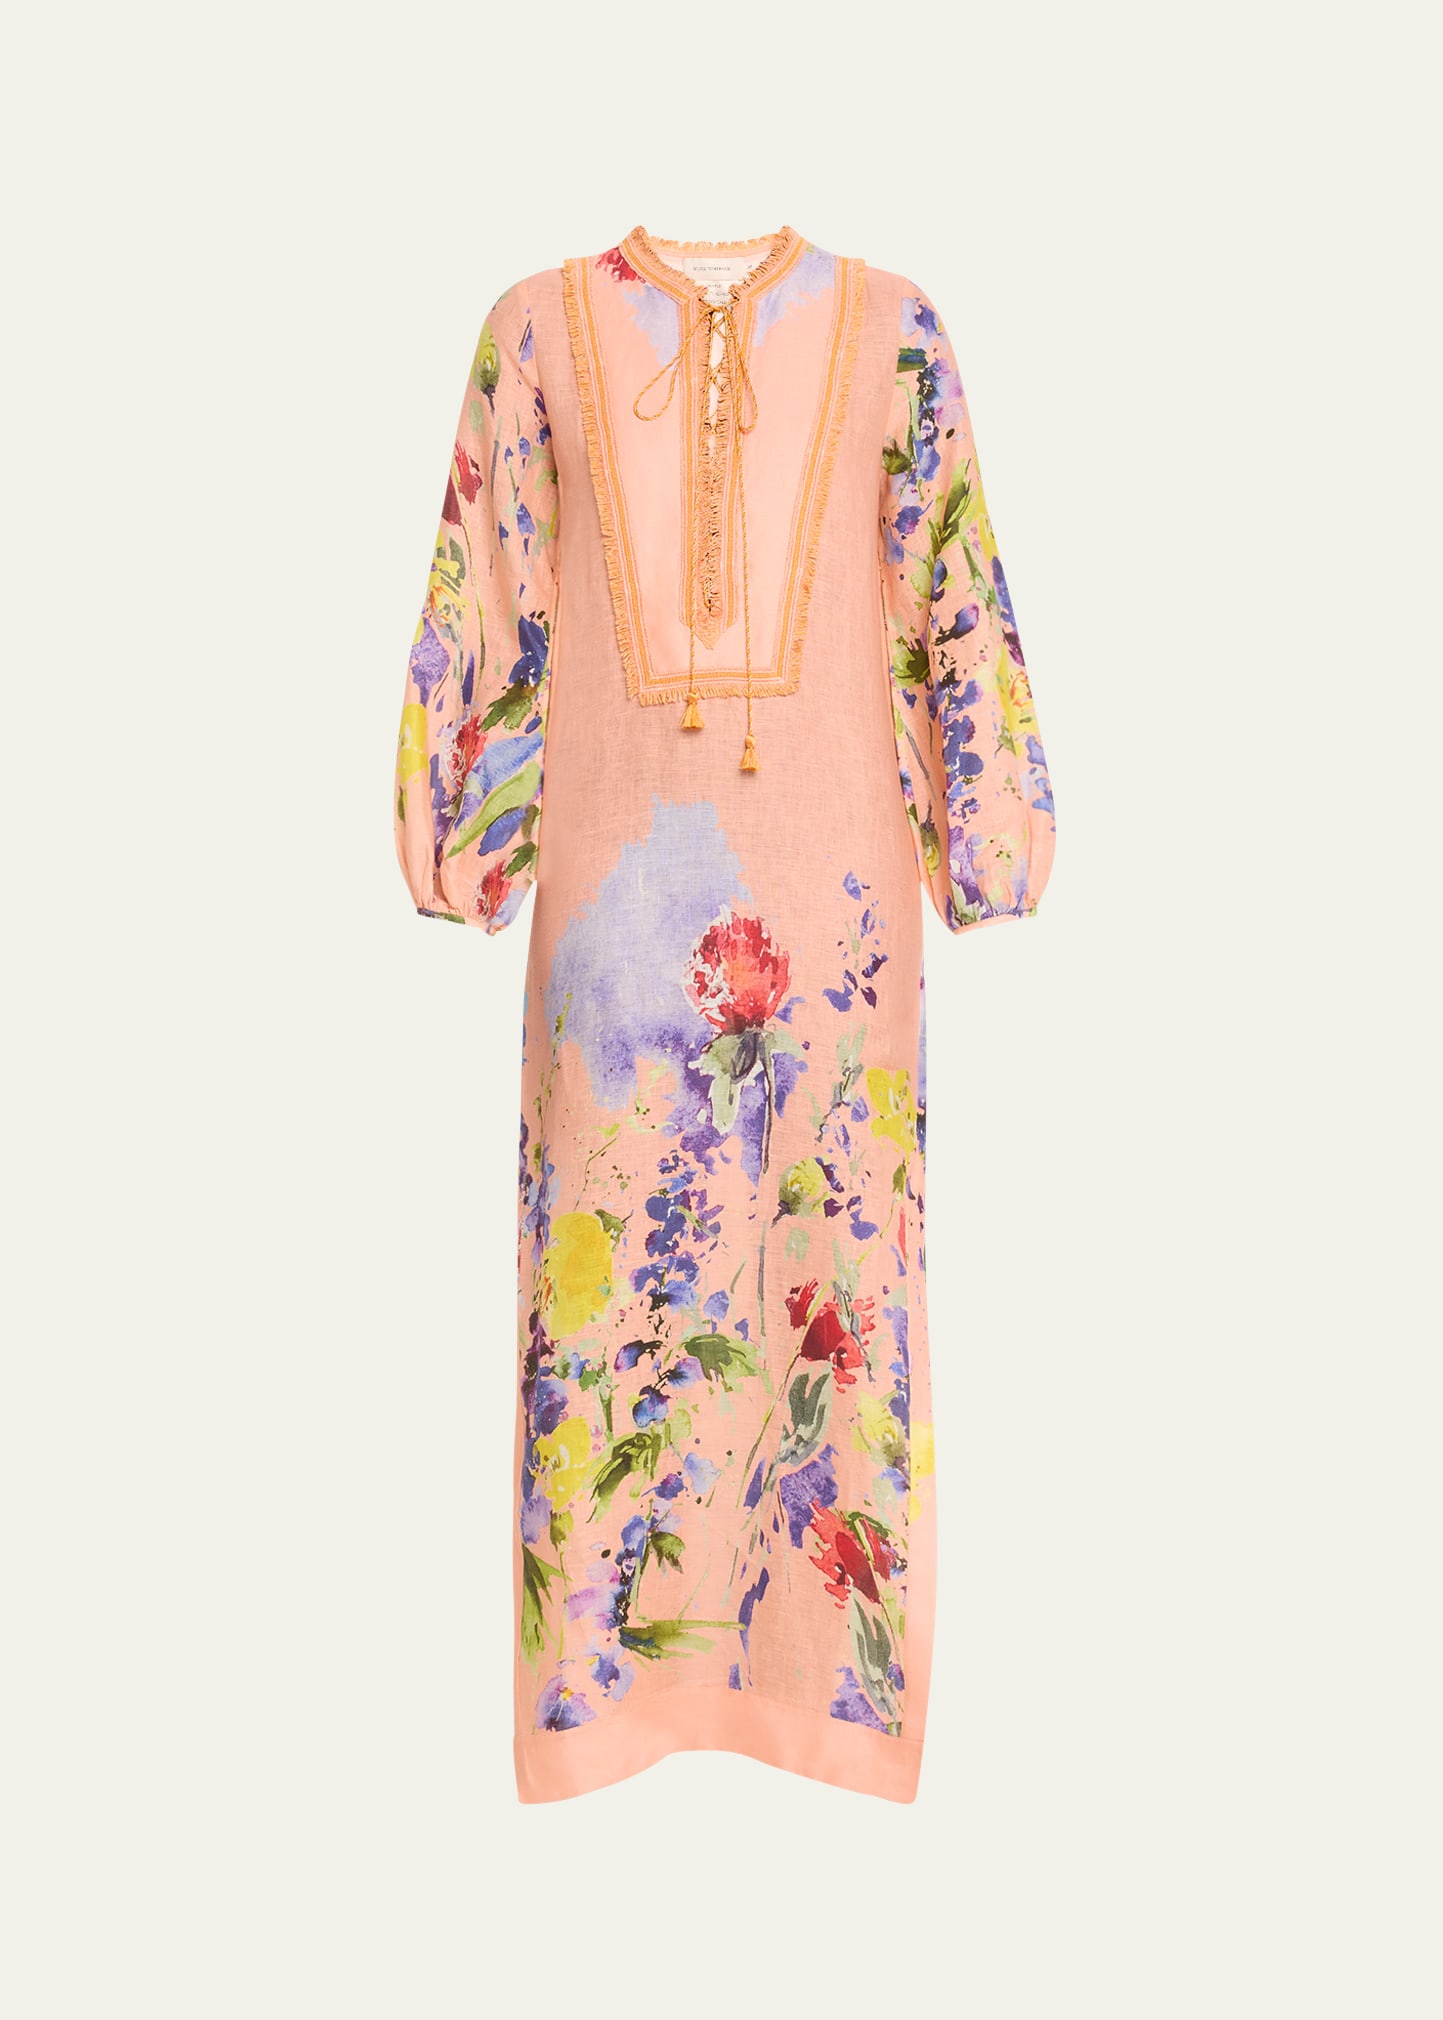 Isernia Floral Fringe-Trim Lace-Up Linen Tunic